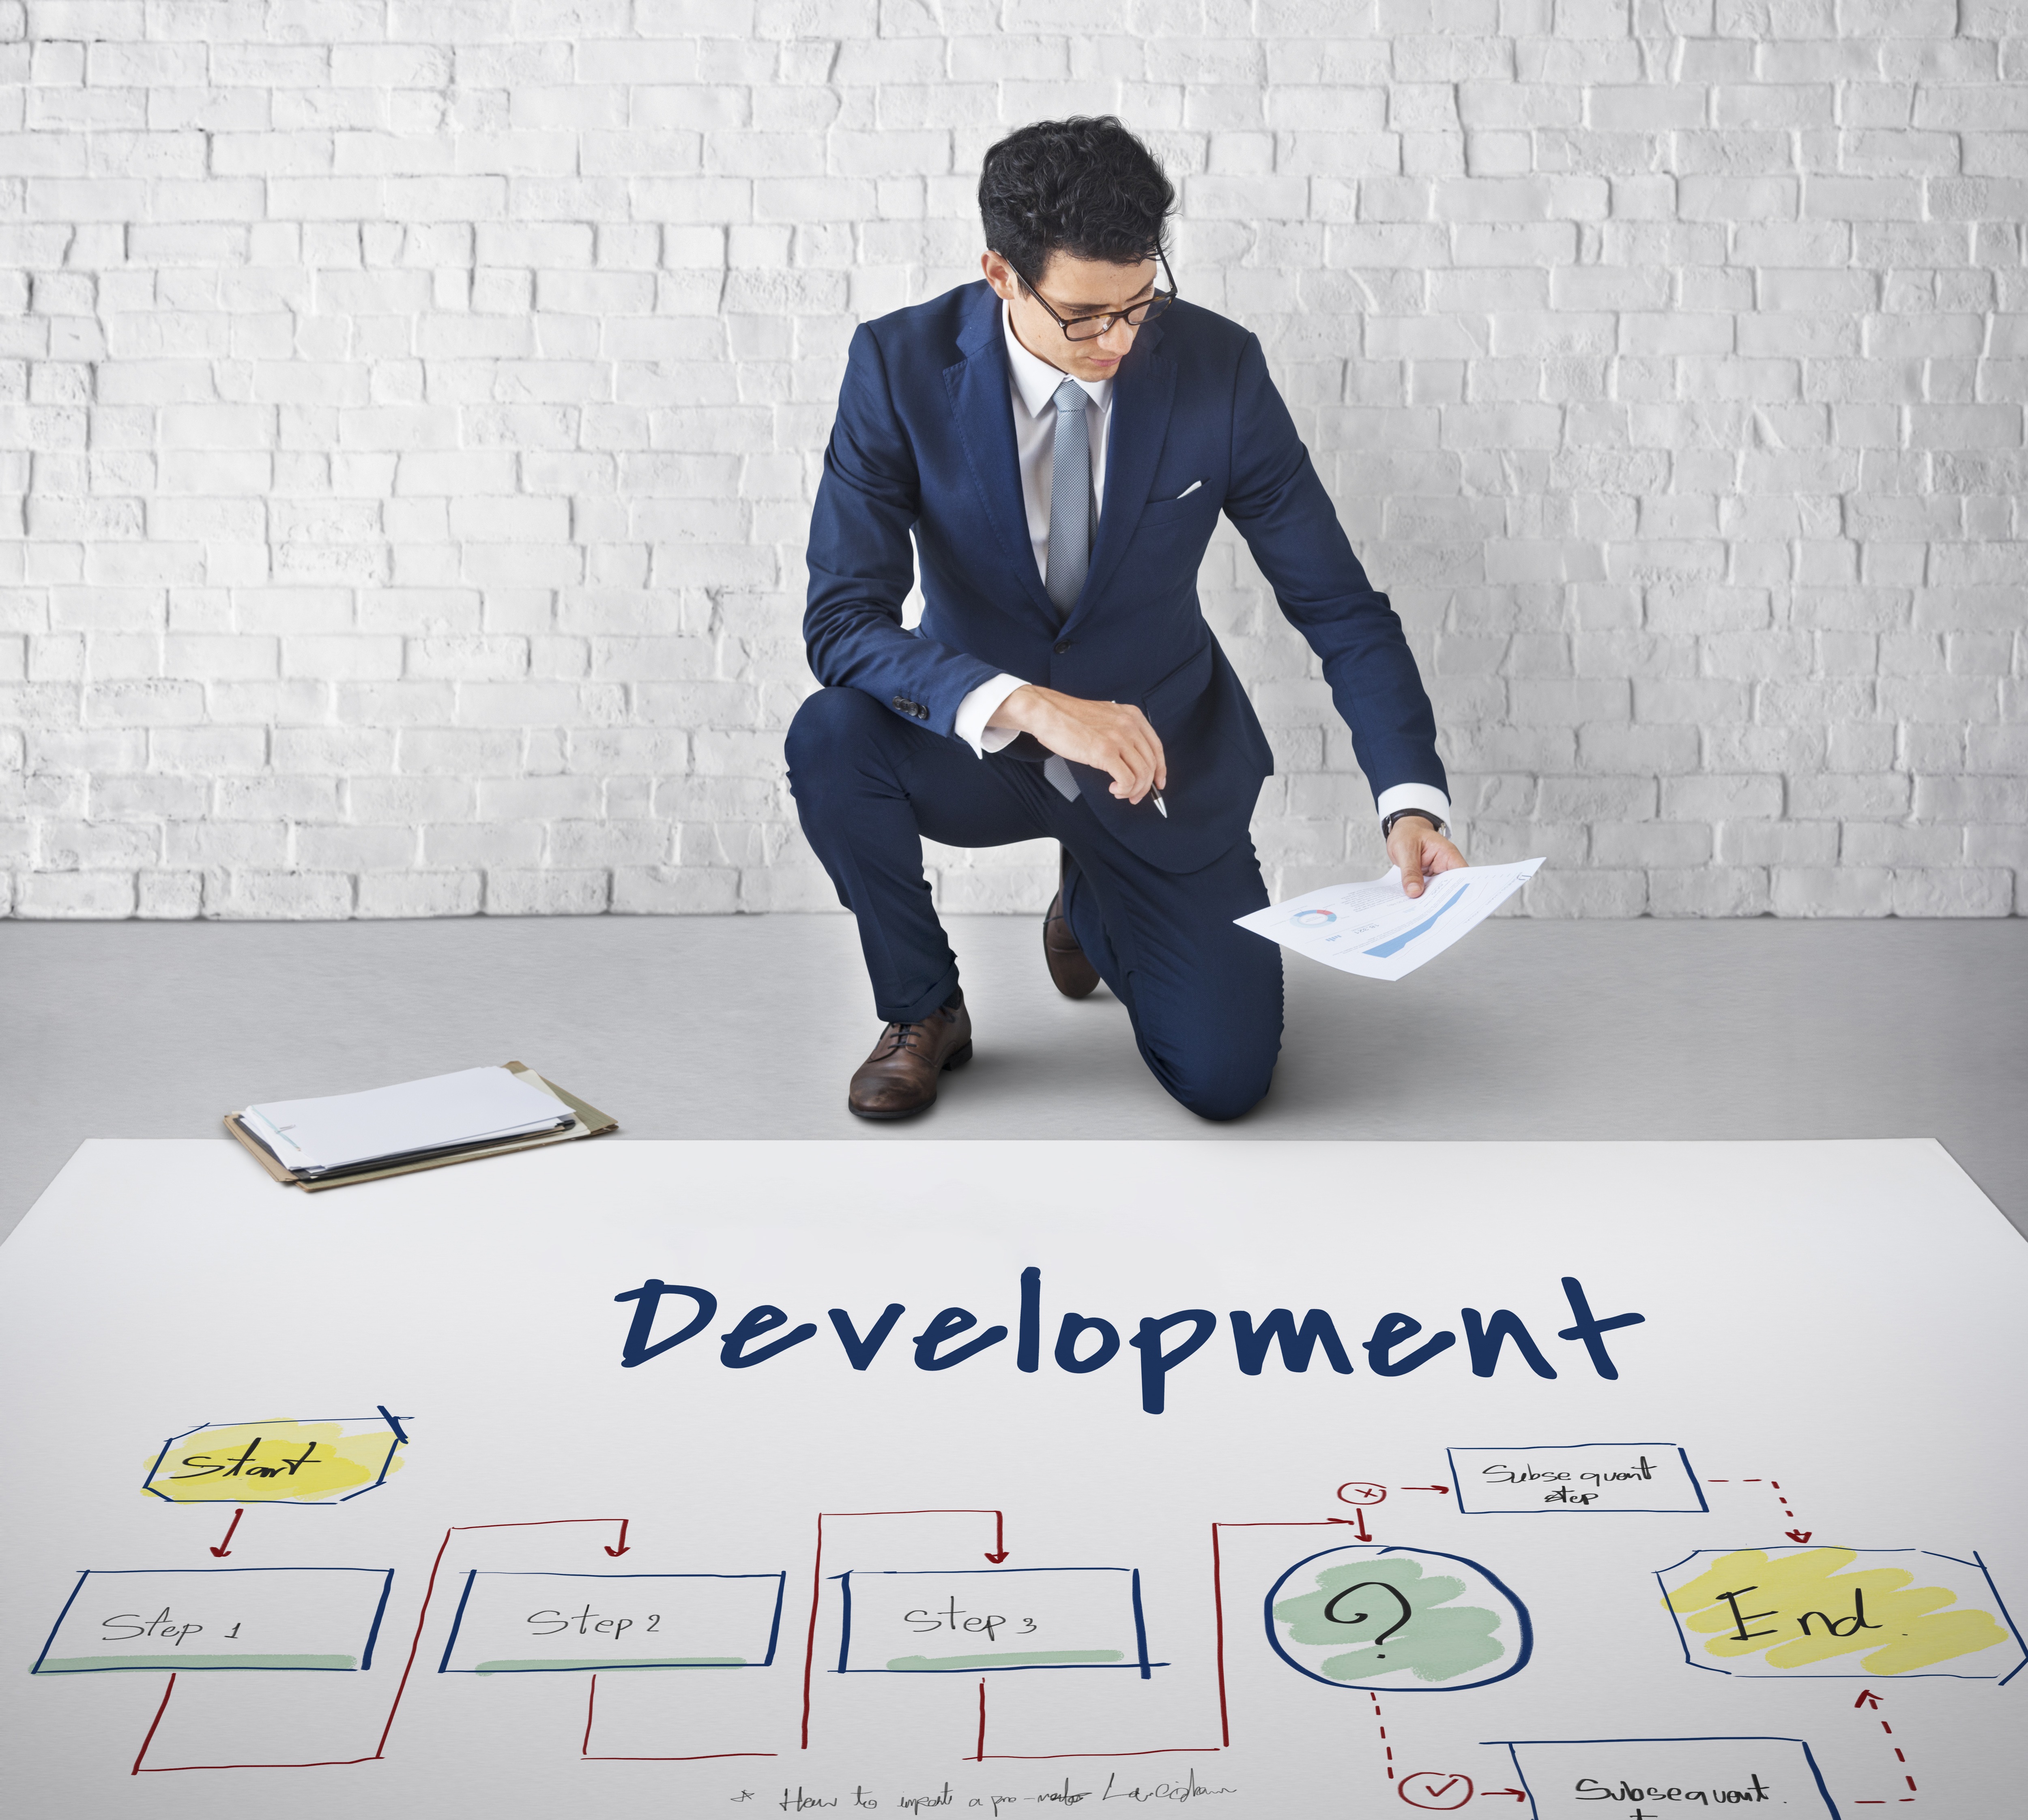 LinkedIn for Career Development and Advancement